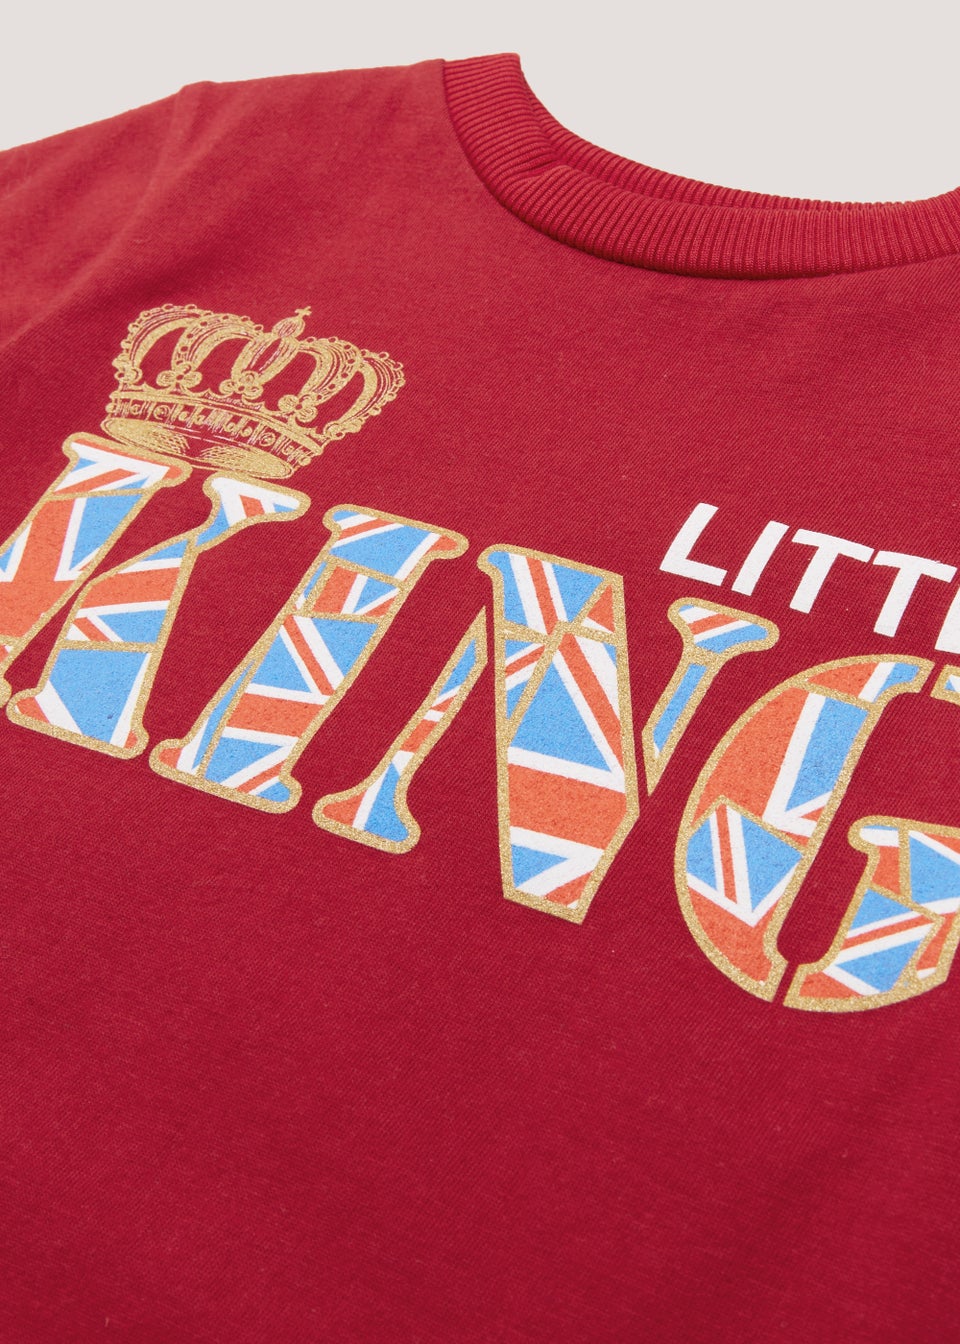 Boys Red Little King T-Shirt (9mths-6yrs)